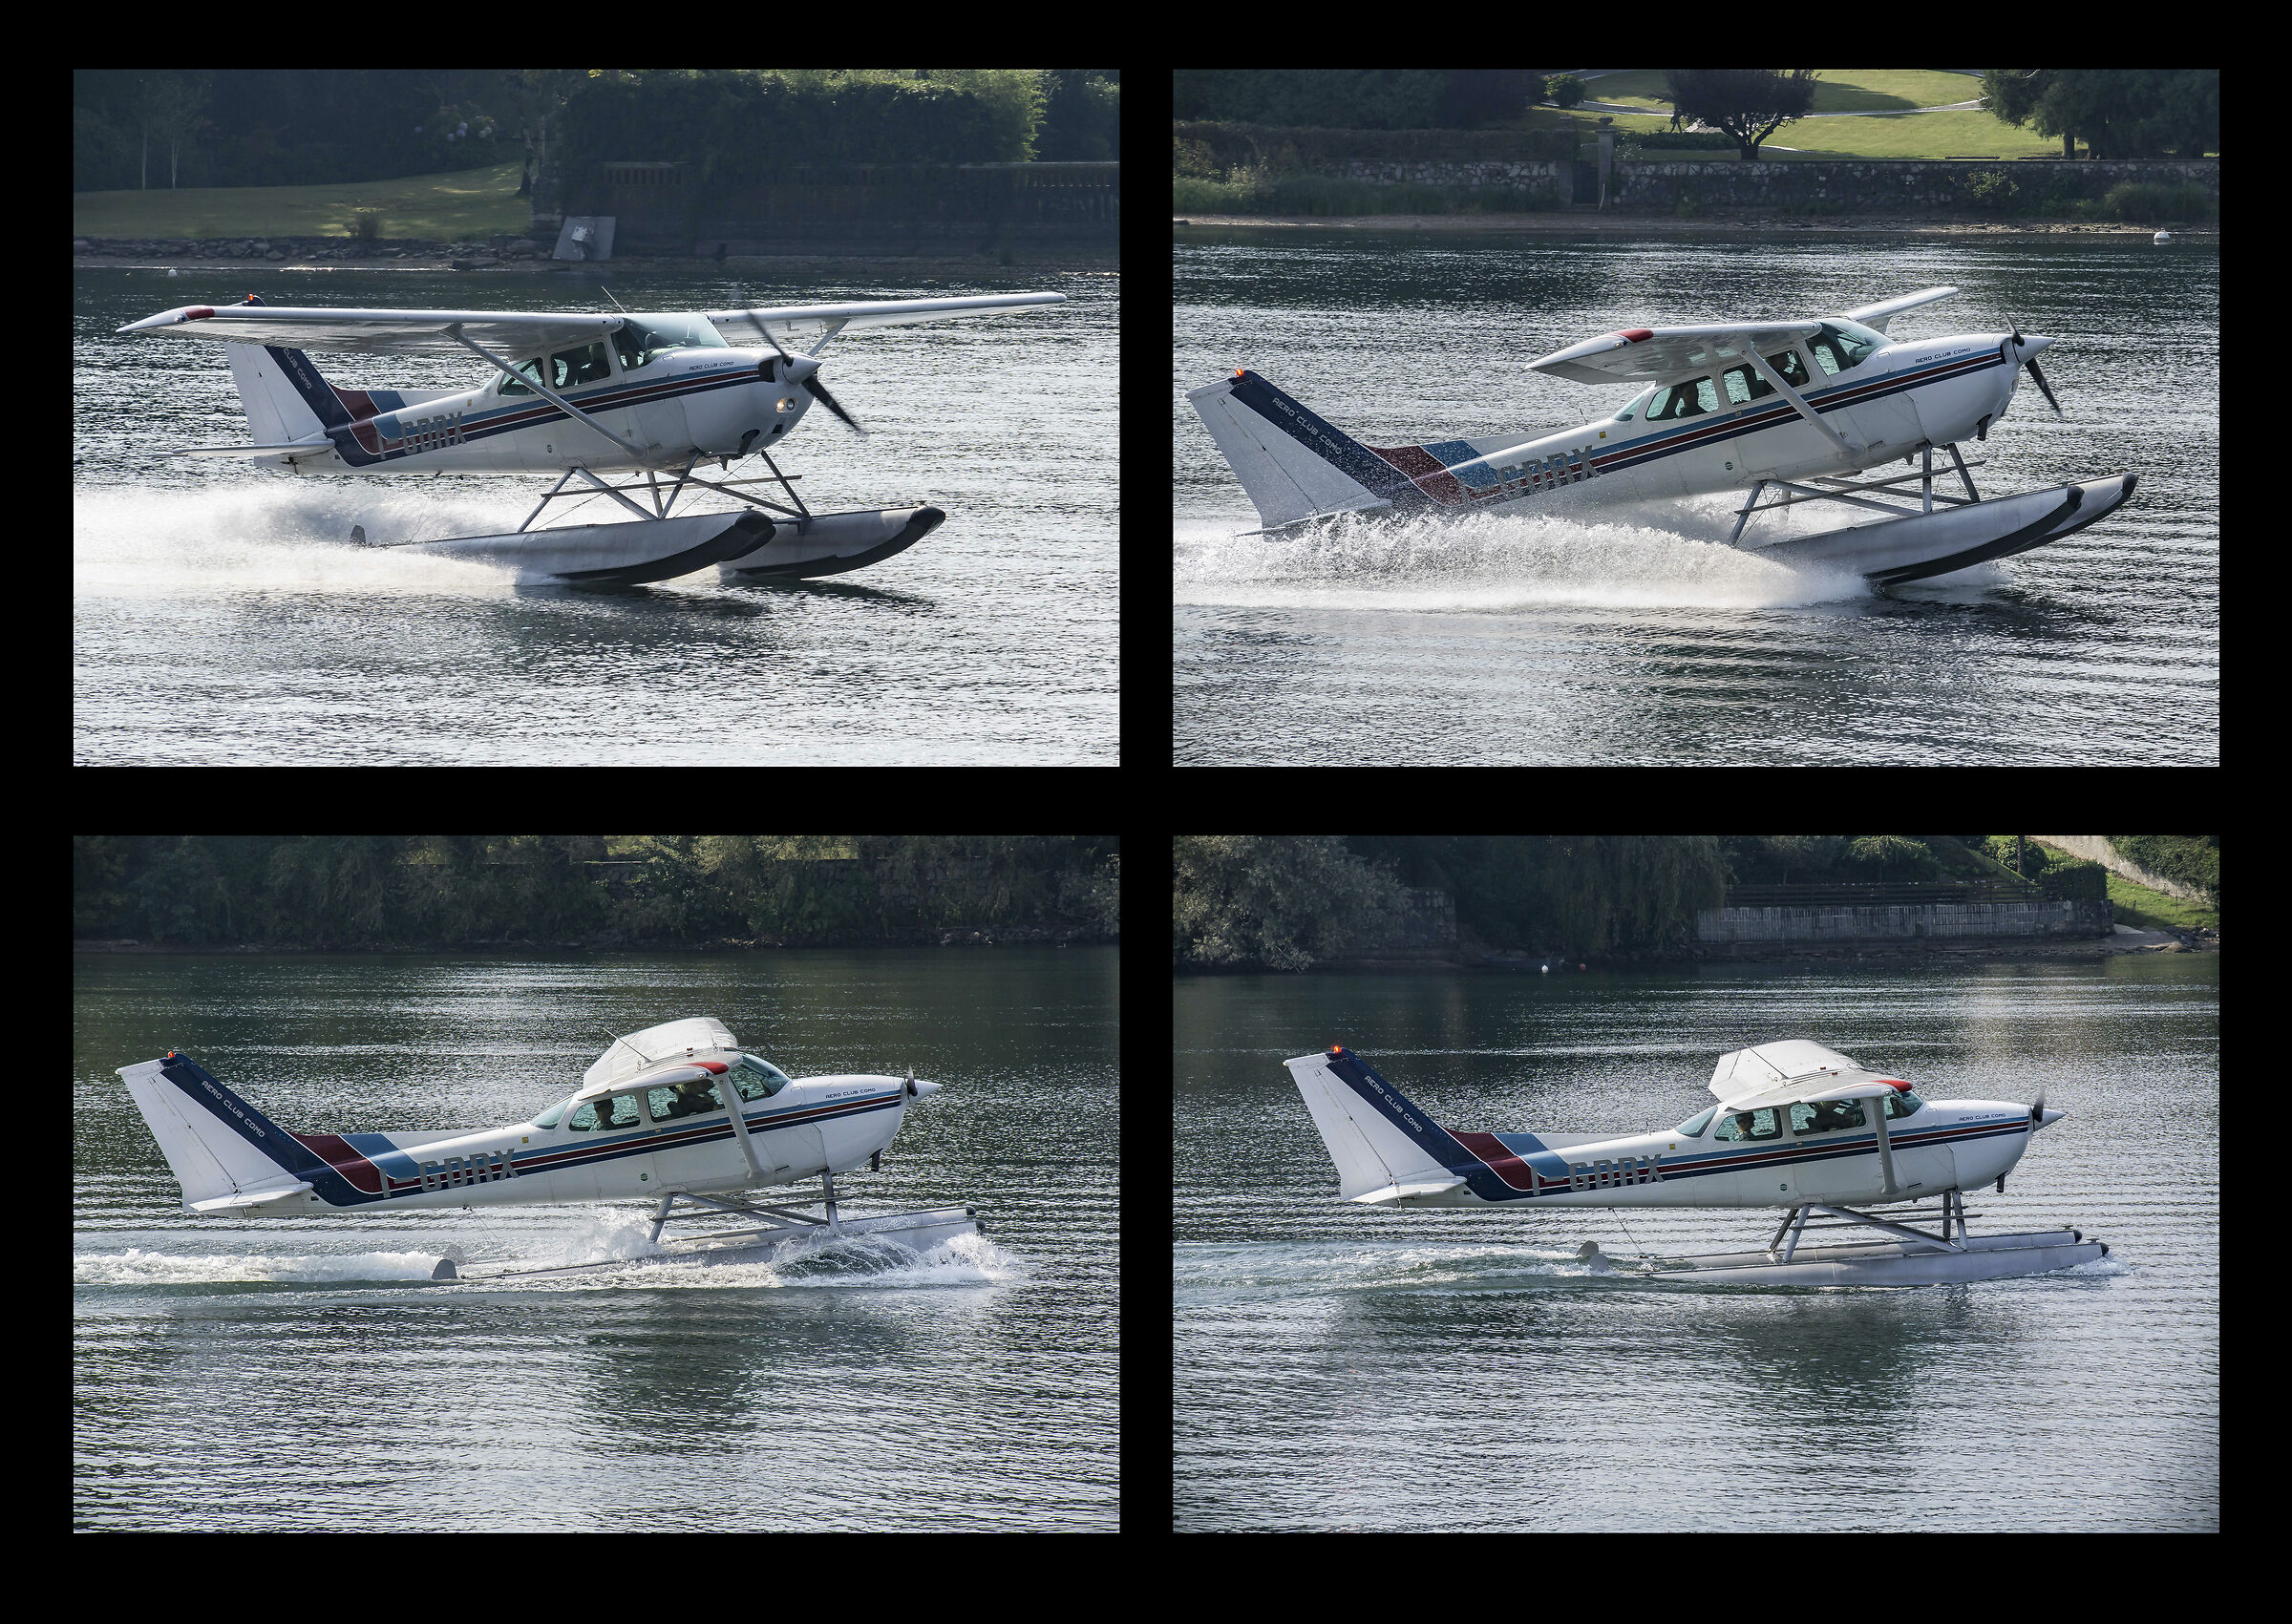 Ammaraggio del Cessna 172 “Skyhawk”...